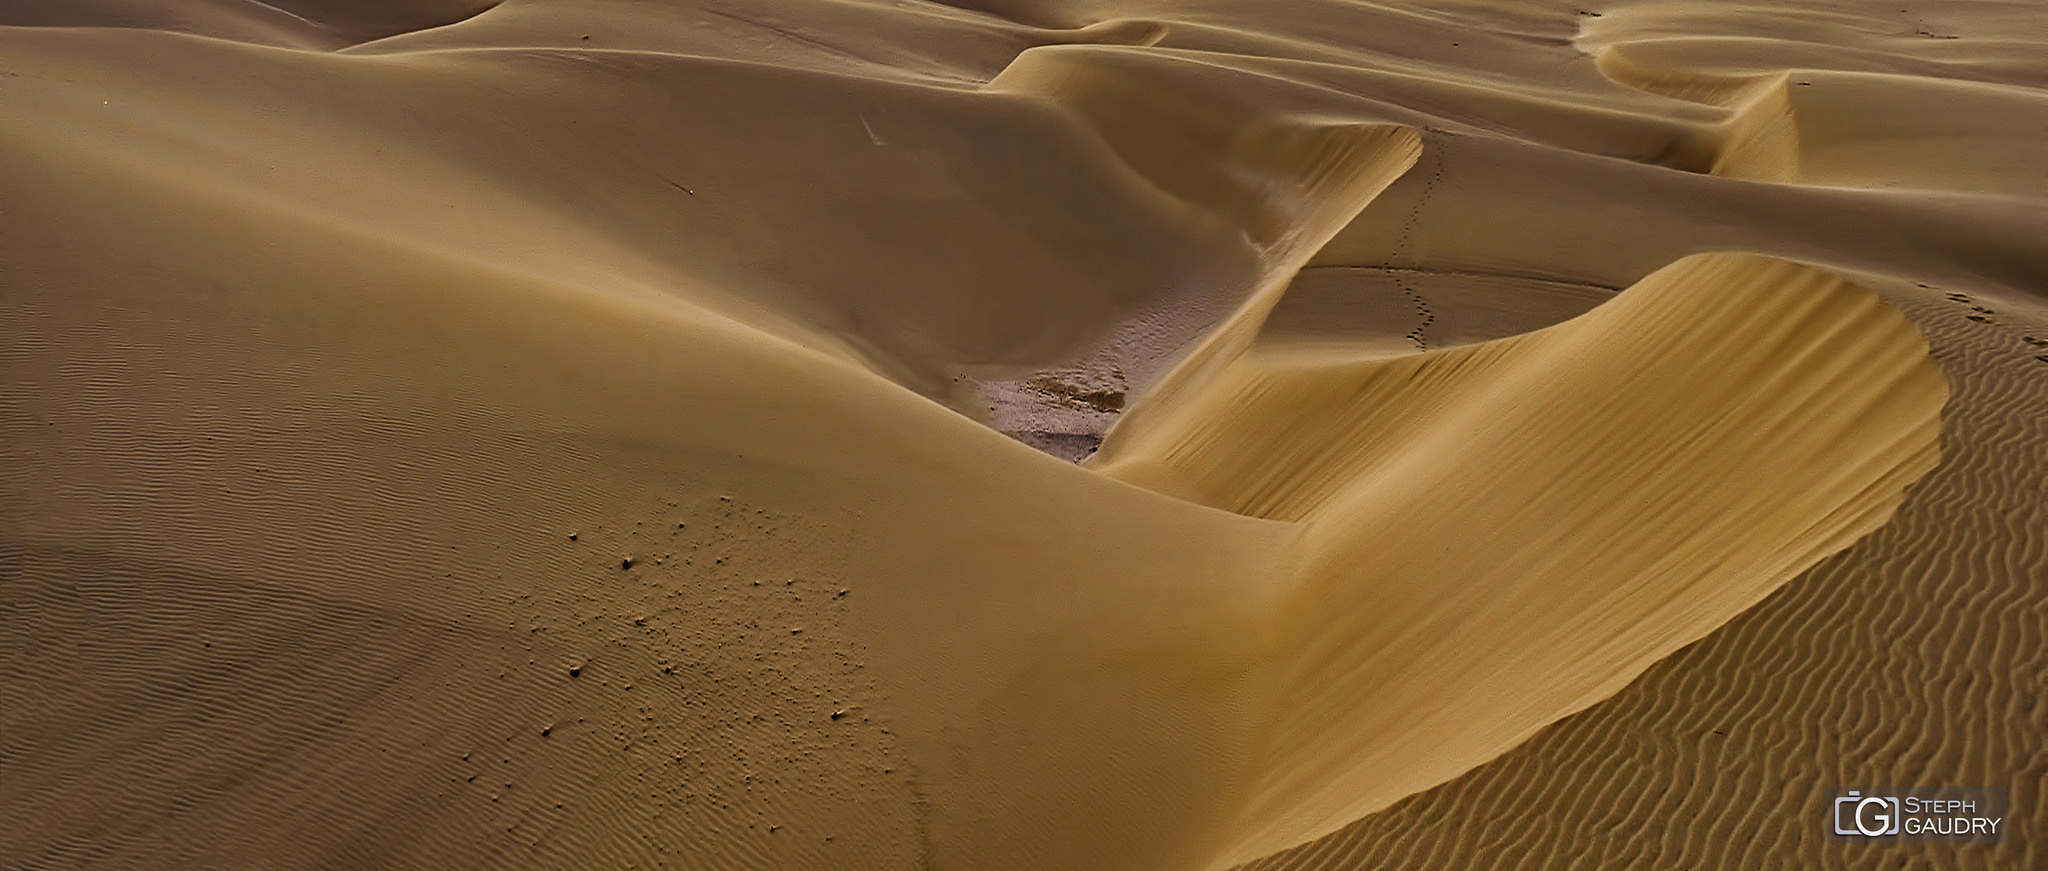 Boa Vista - du sable à perte de vue [Click to start slideshow]